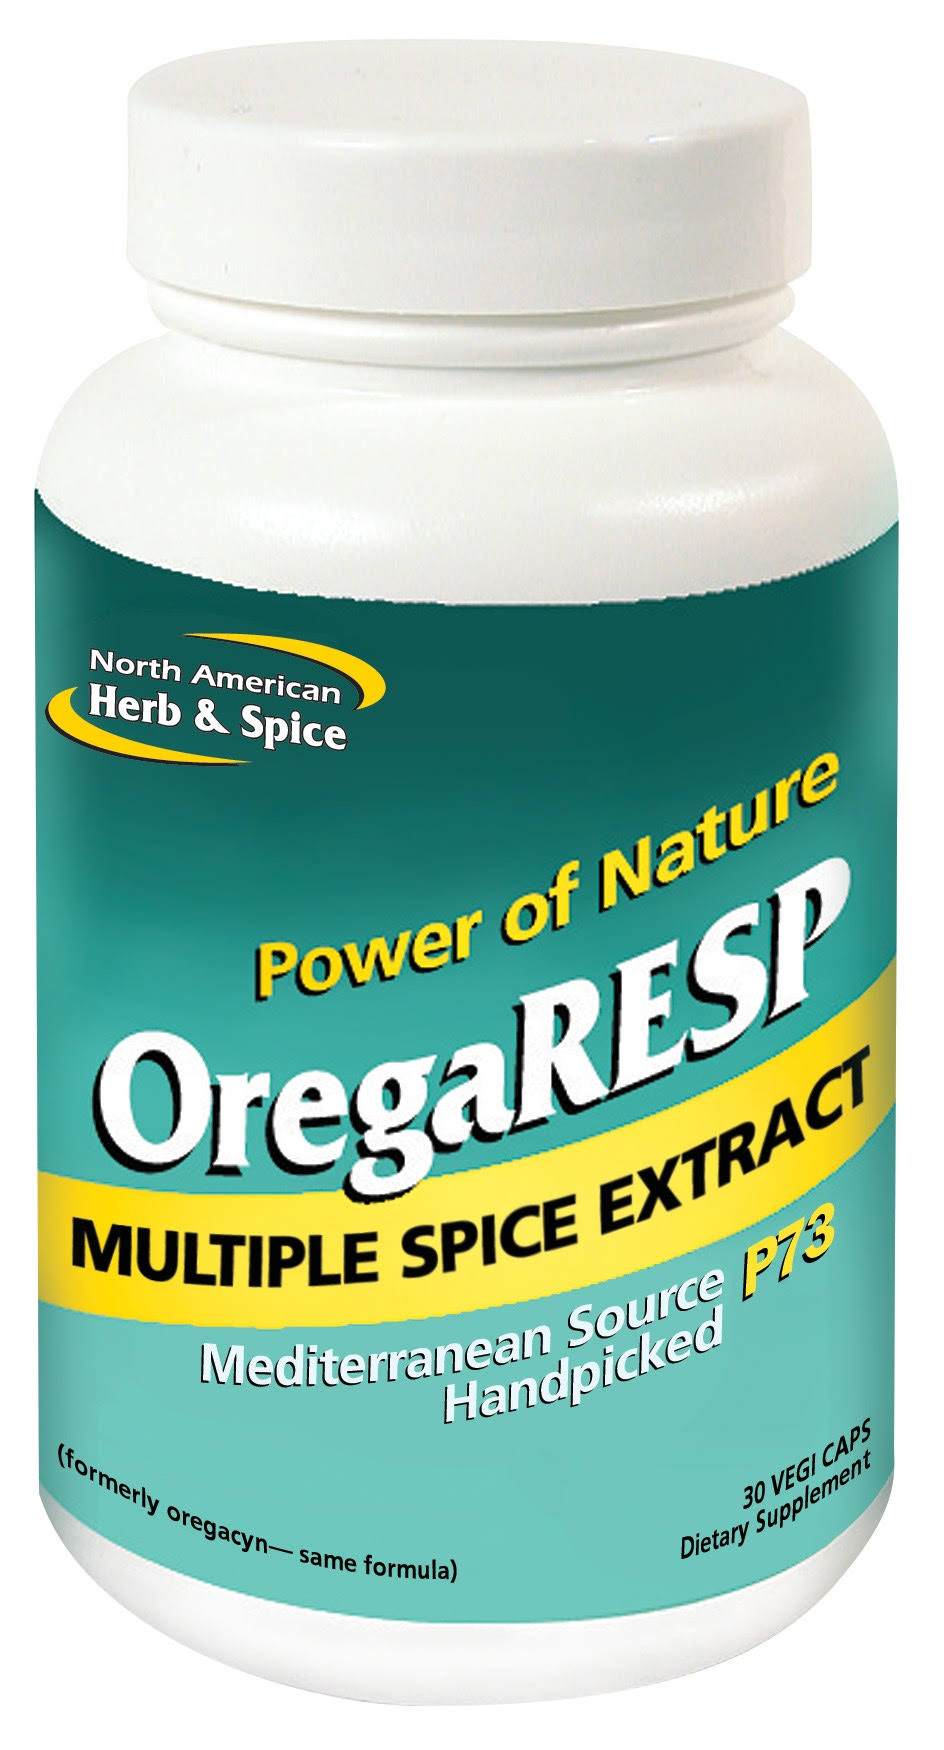 North American Herb & Spice Oregaresp MultiSpice Extract Supplement - Wild, Mediterranean, 30ct